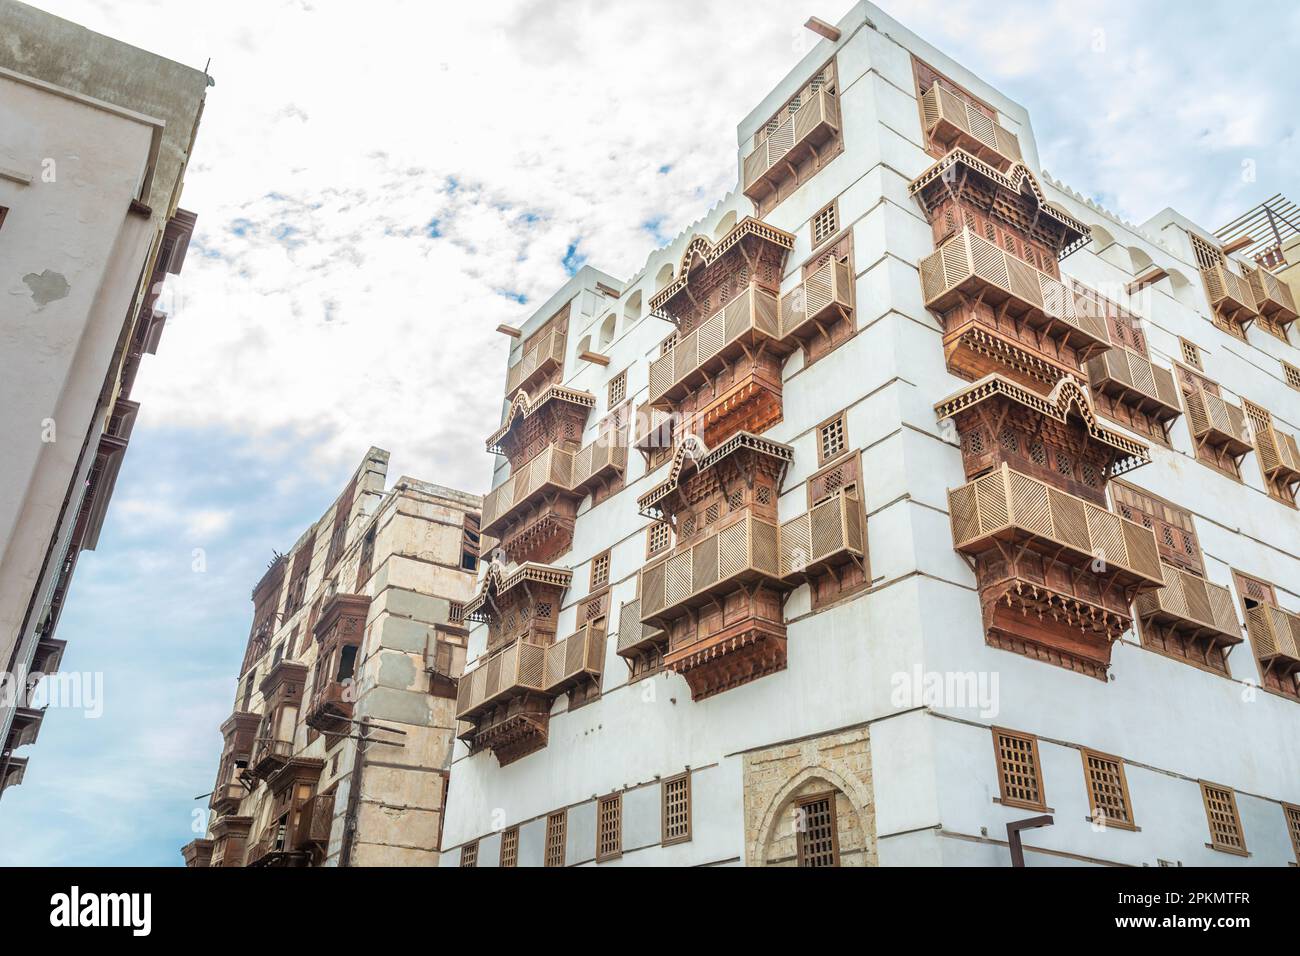 Al-Balad old town with traditional muslim houses, Jeddah, Saudi Arabia Stock Photo